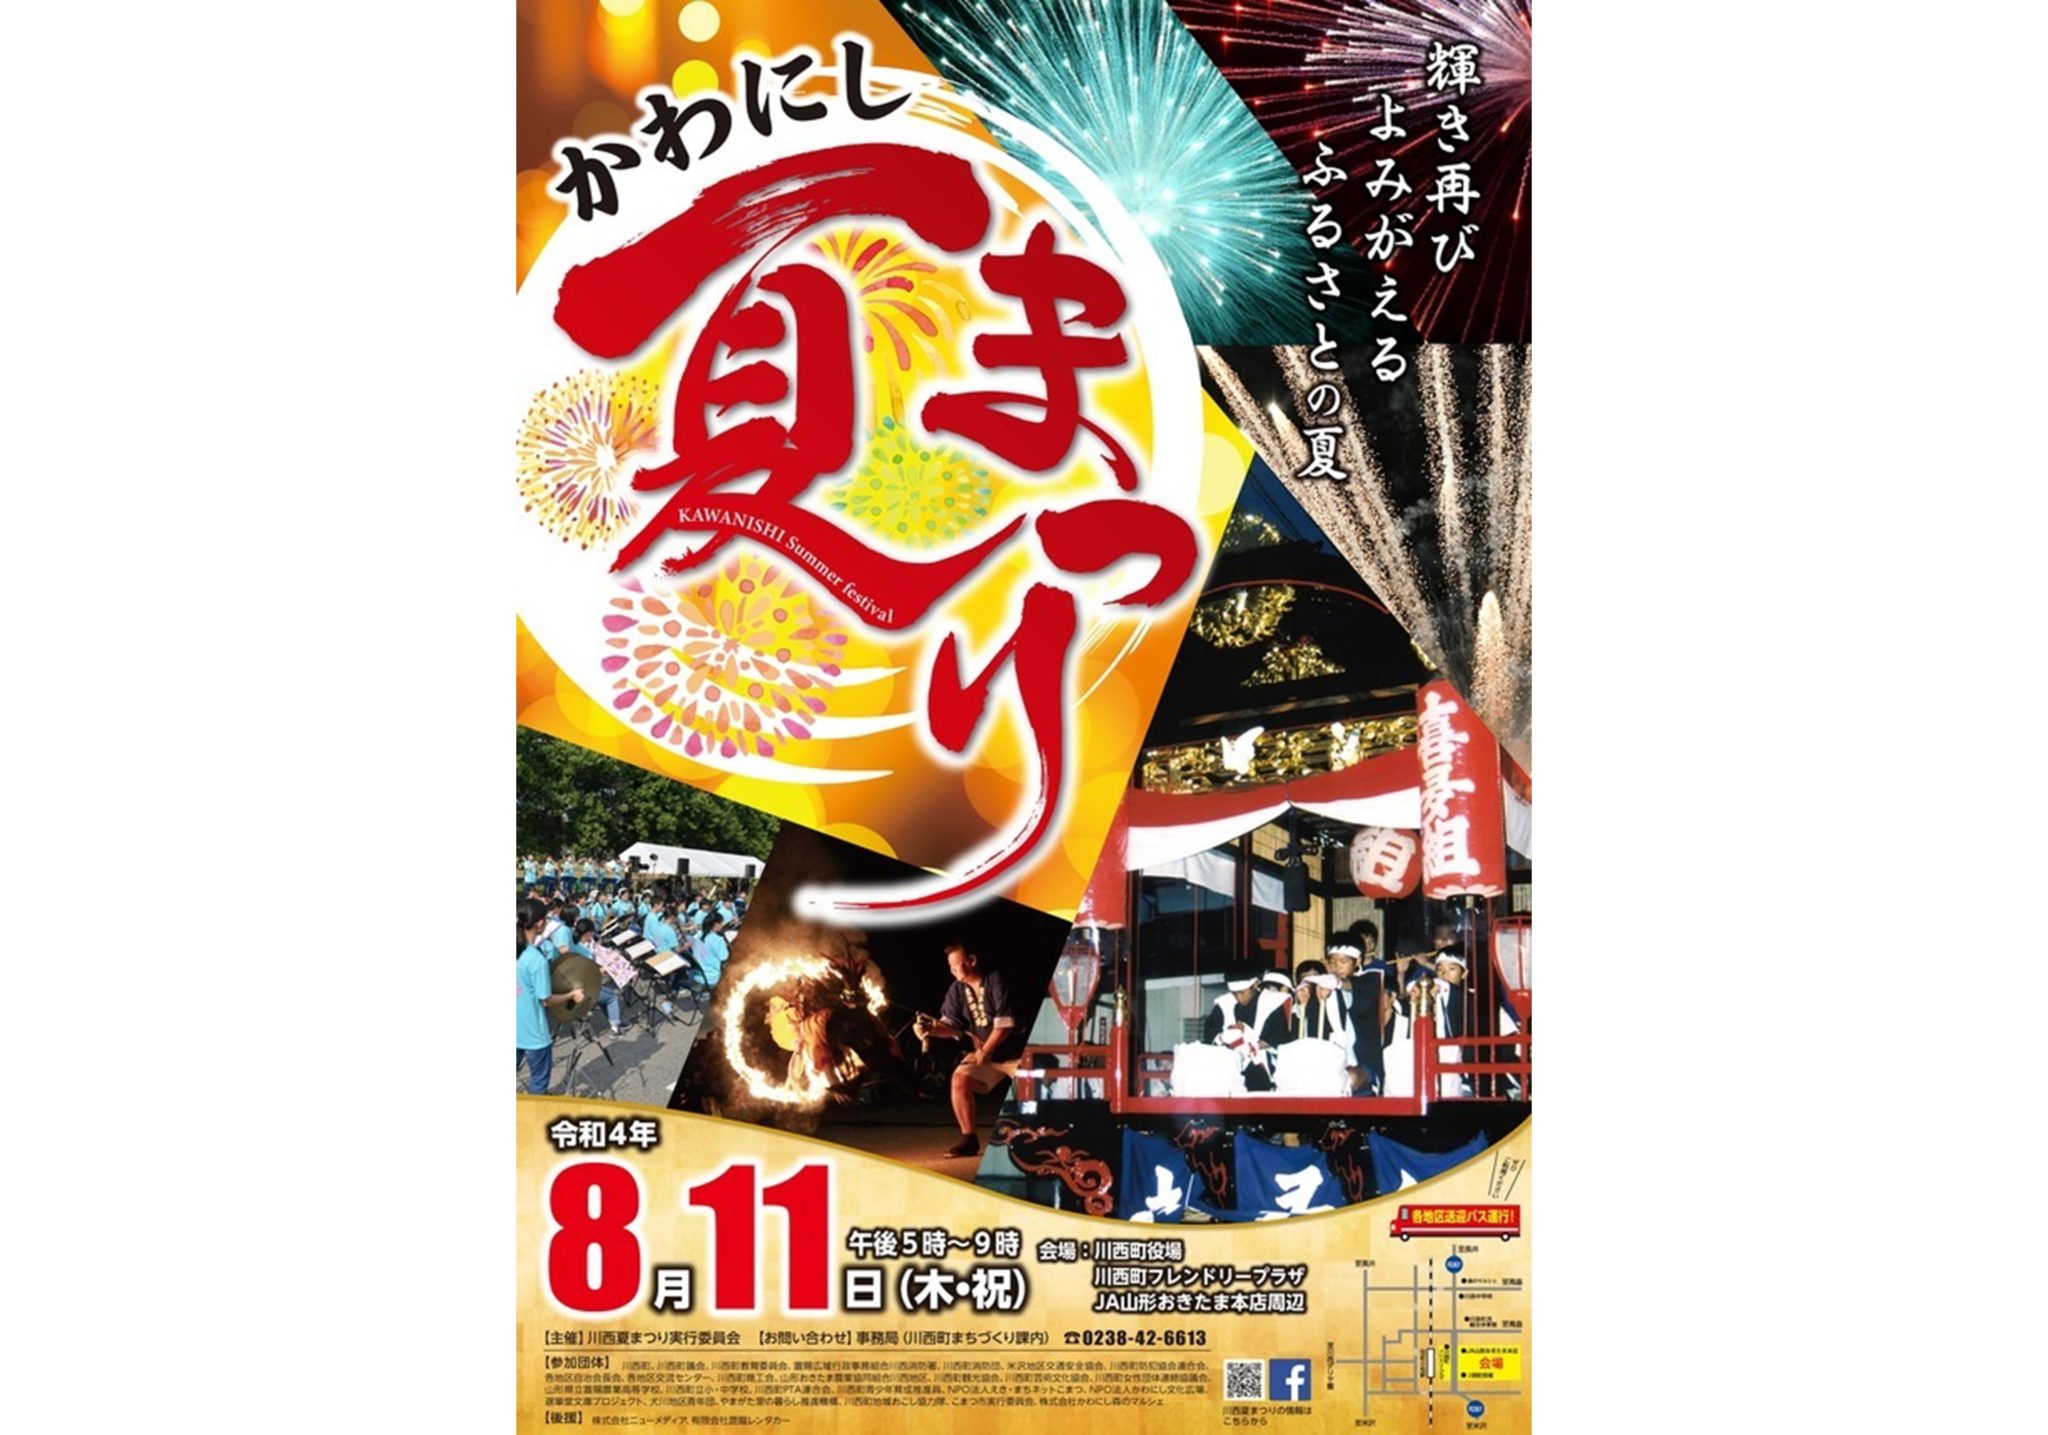 Kawanishi Summer Festival